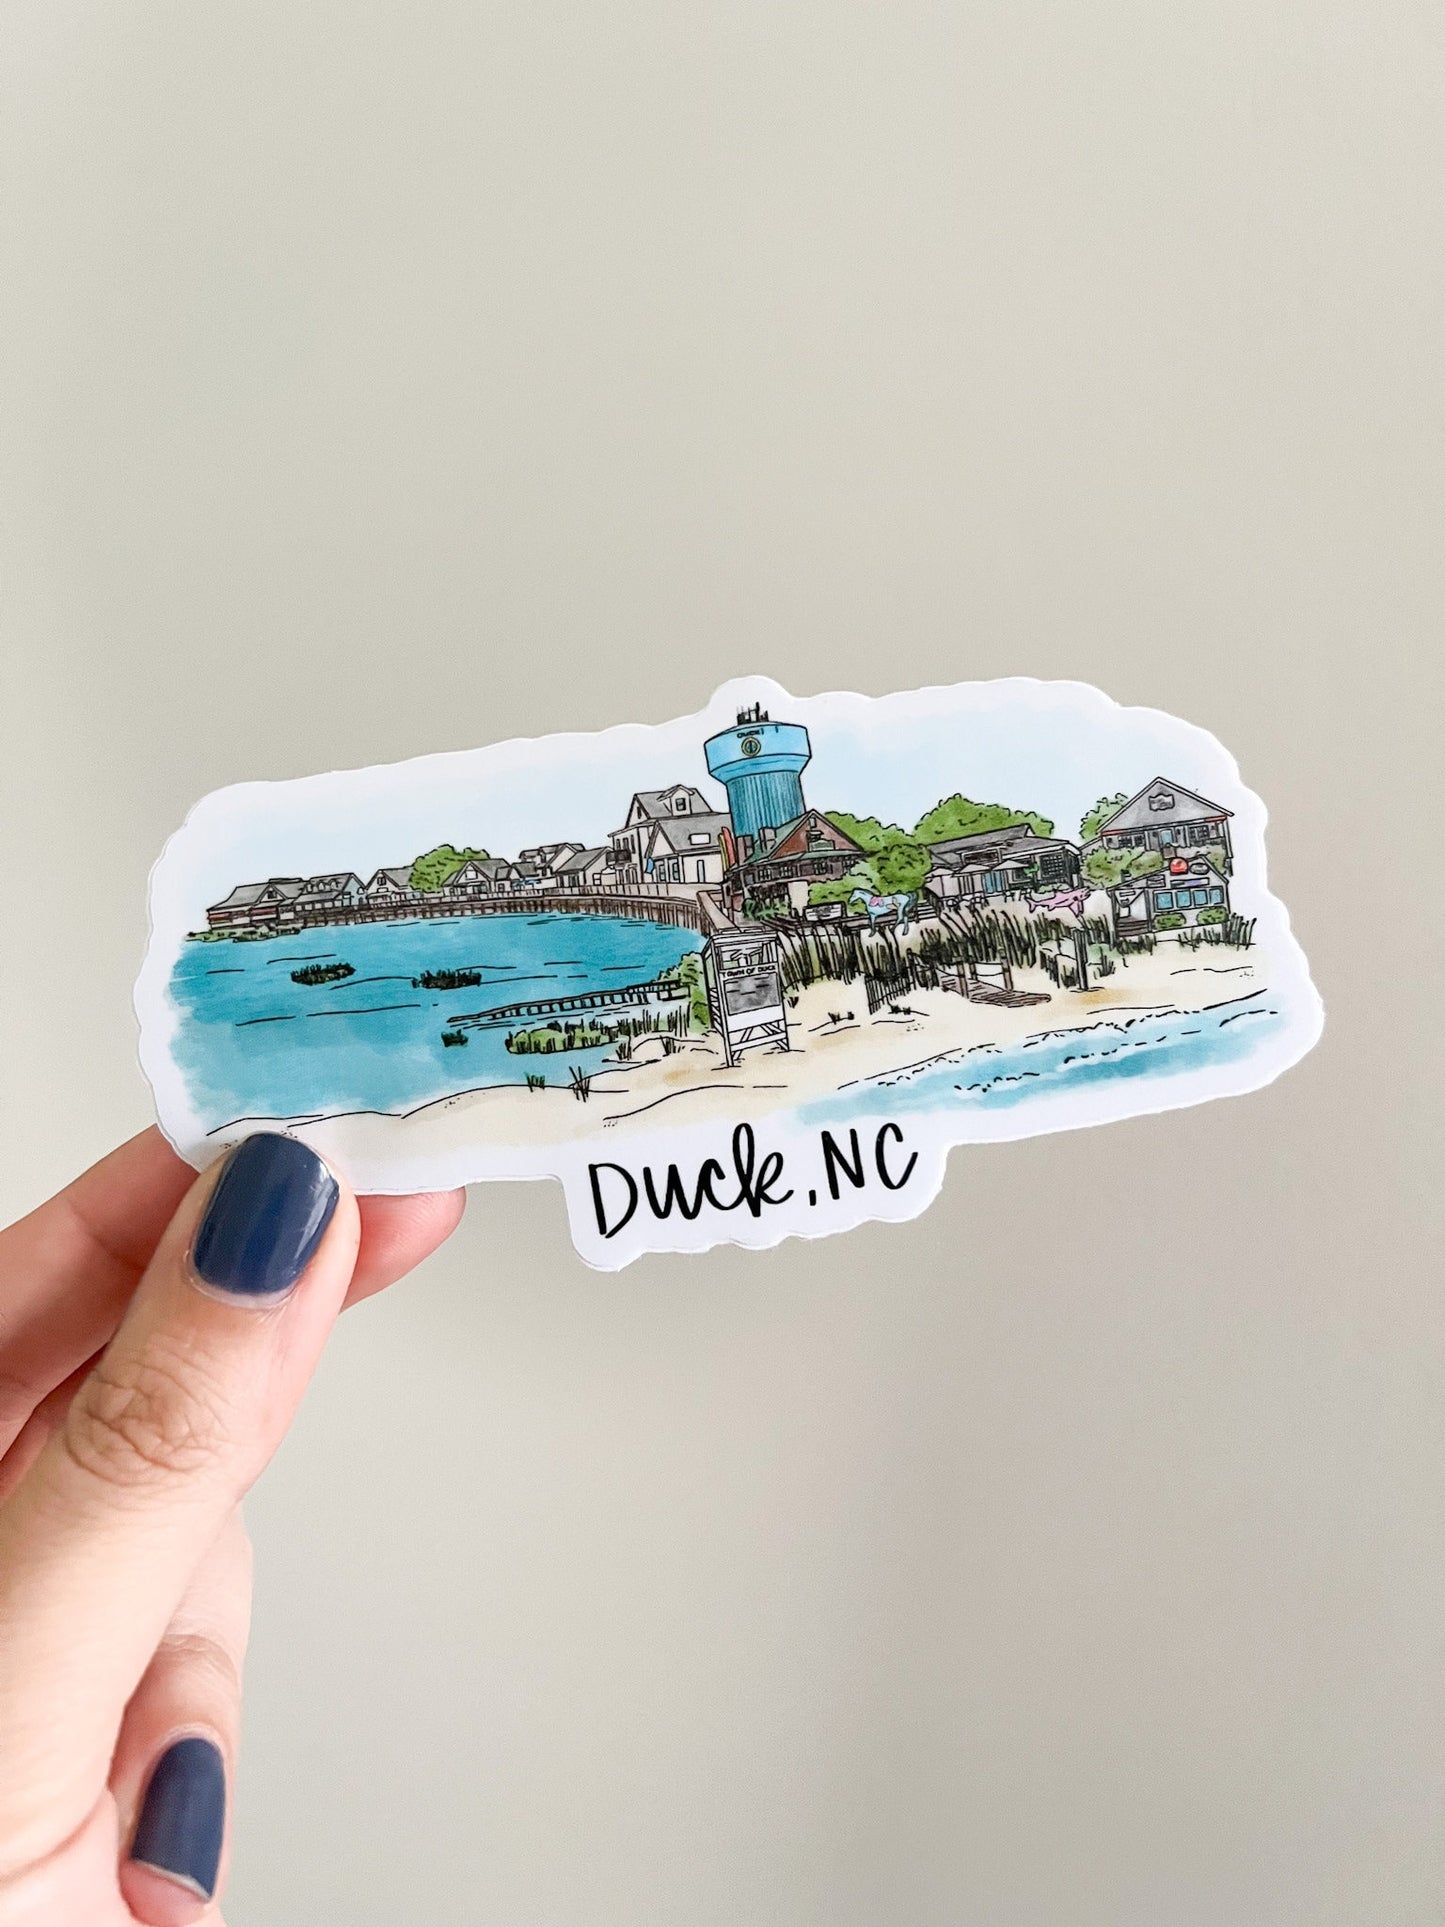 artistic skyline created of various landmarks and shoreline vistas found in Duck North Carolina. Sticker being held on white background.